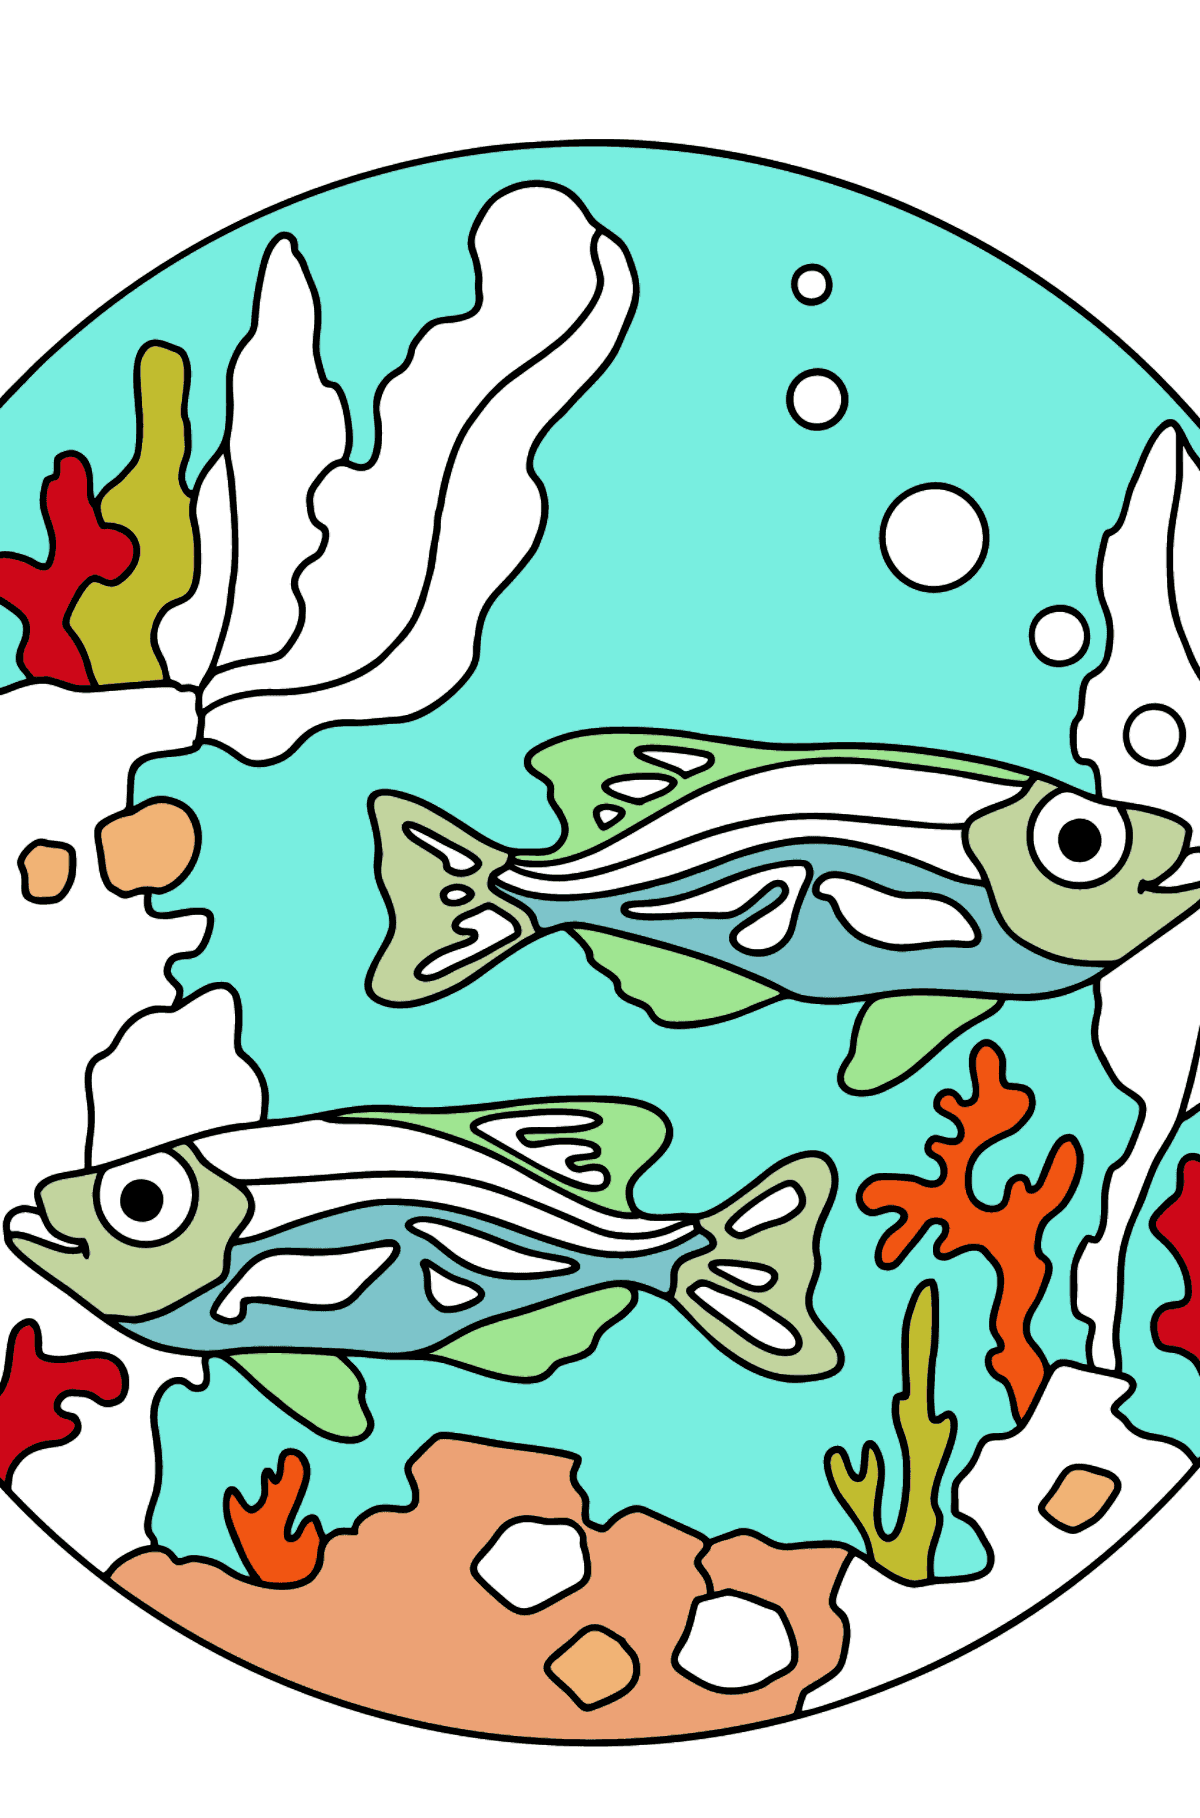 Imagens para colorir - os peixes nadam lindamente - Imagens para Colorir para Crianças